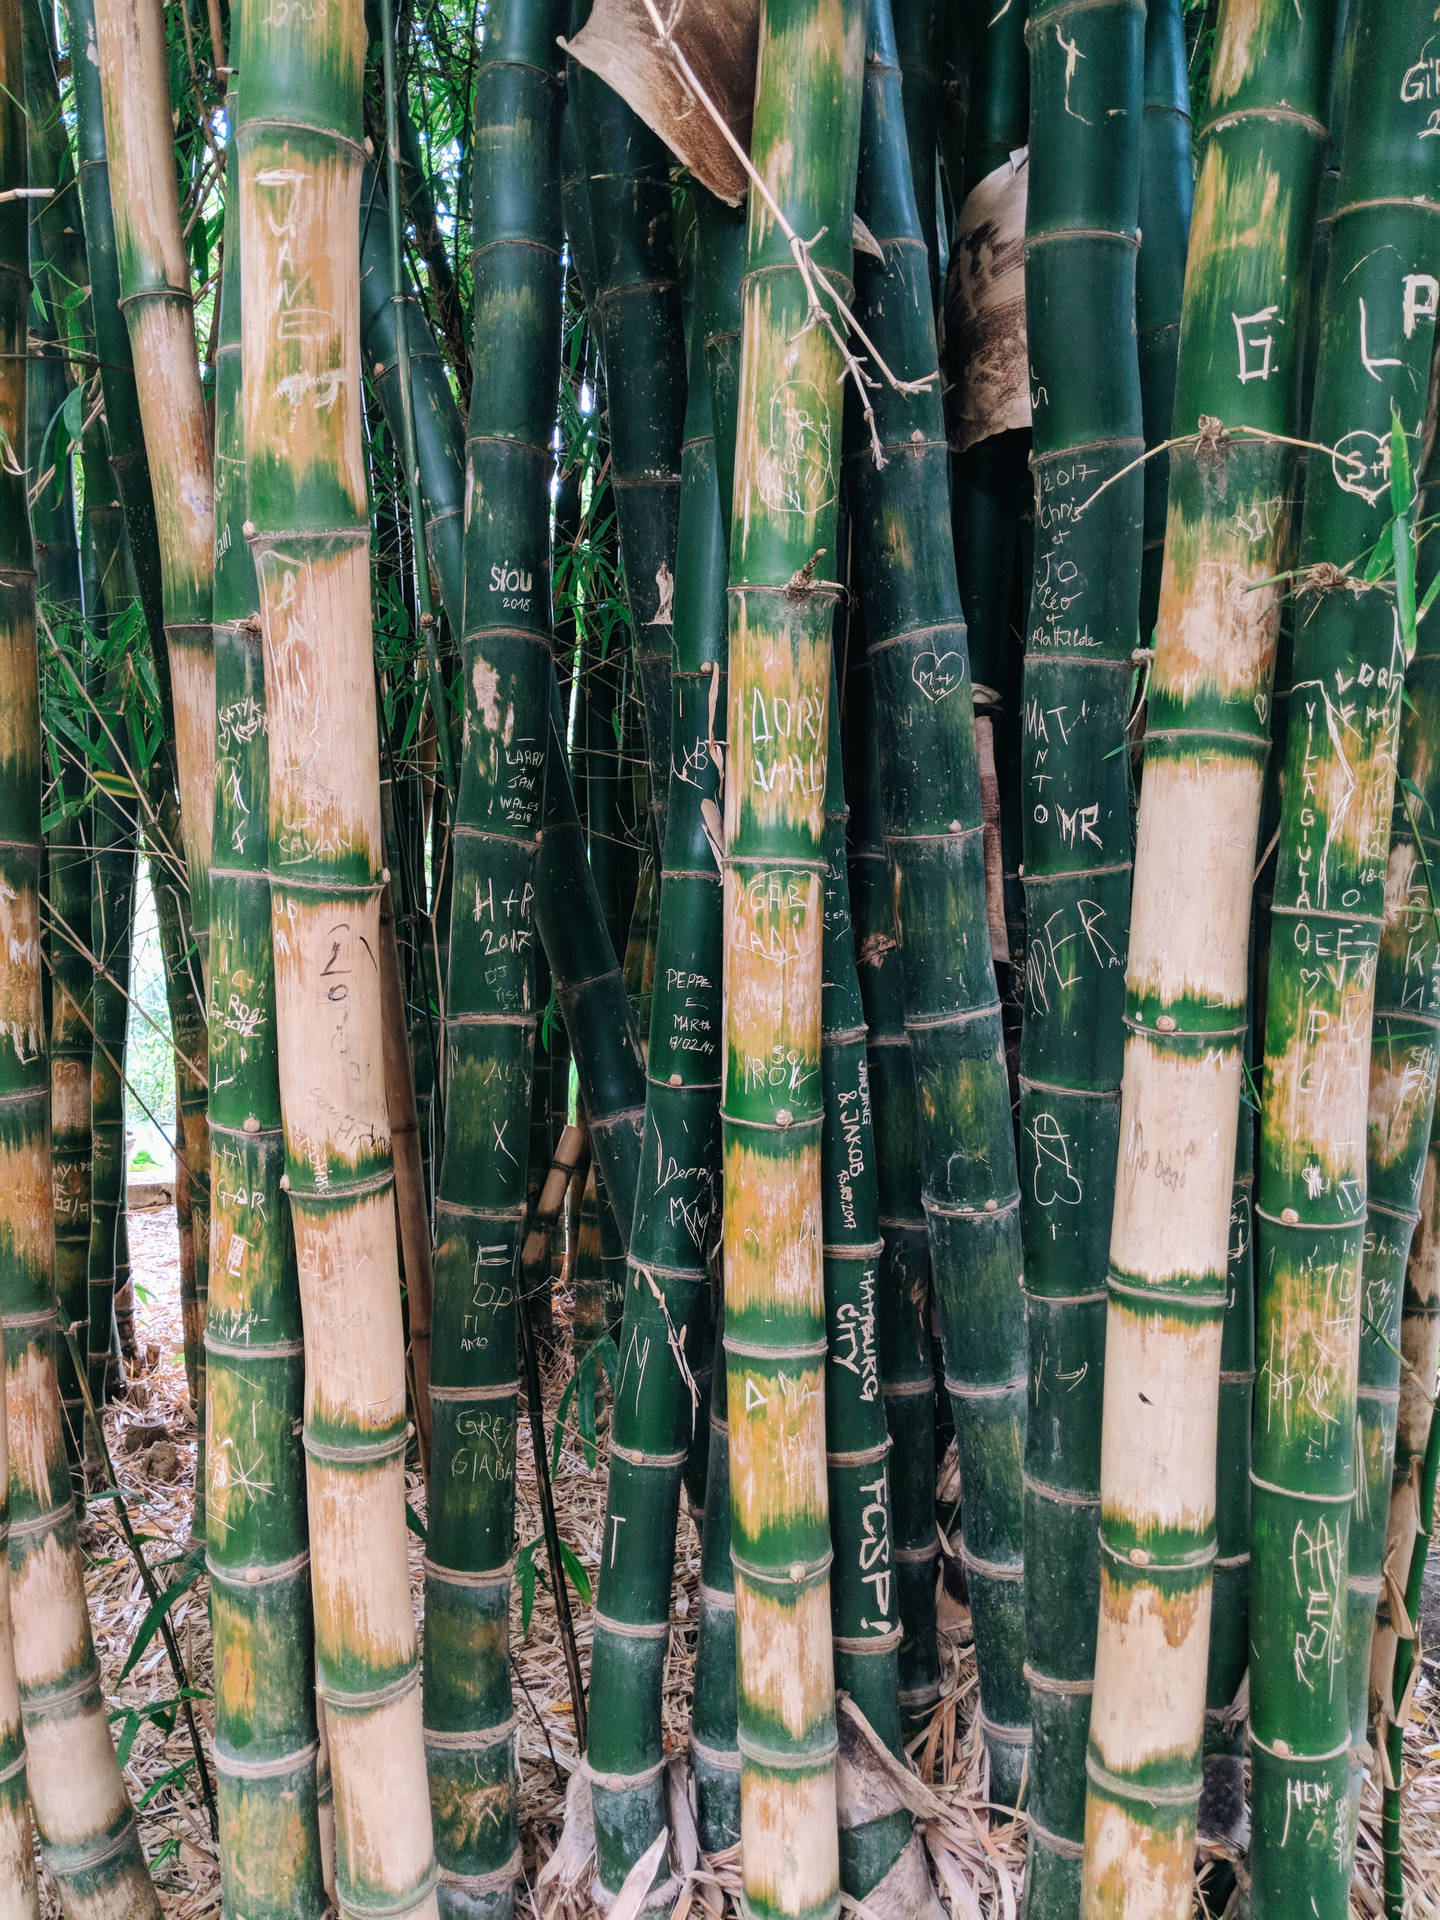 Drying Bamboo Poles